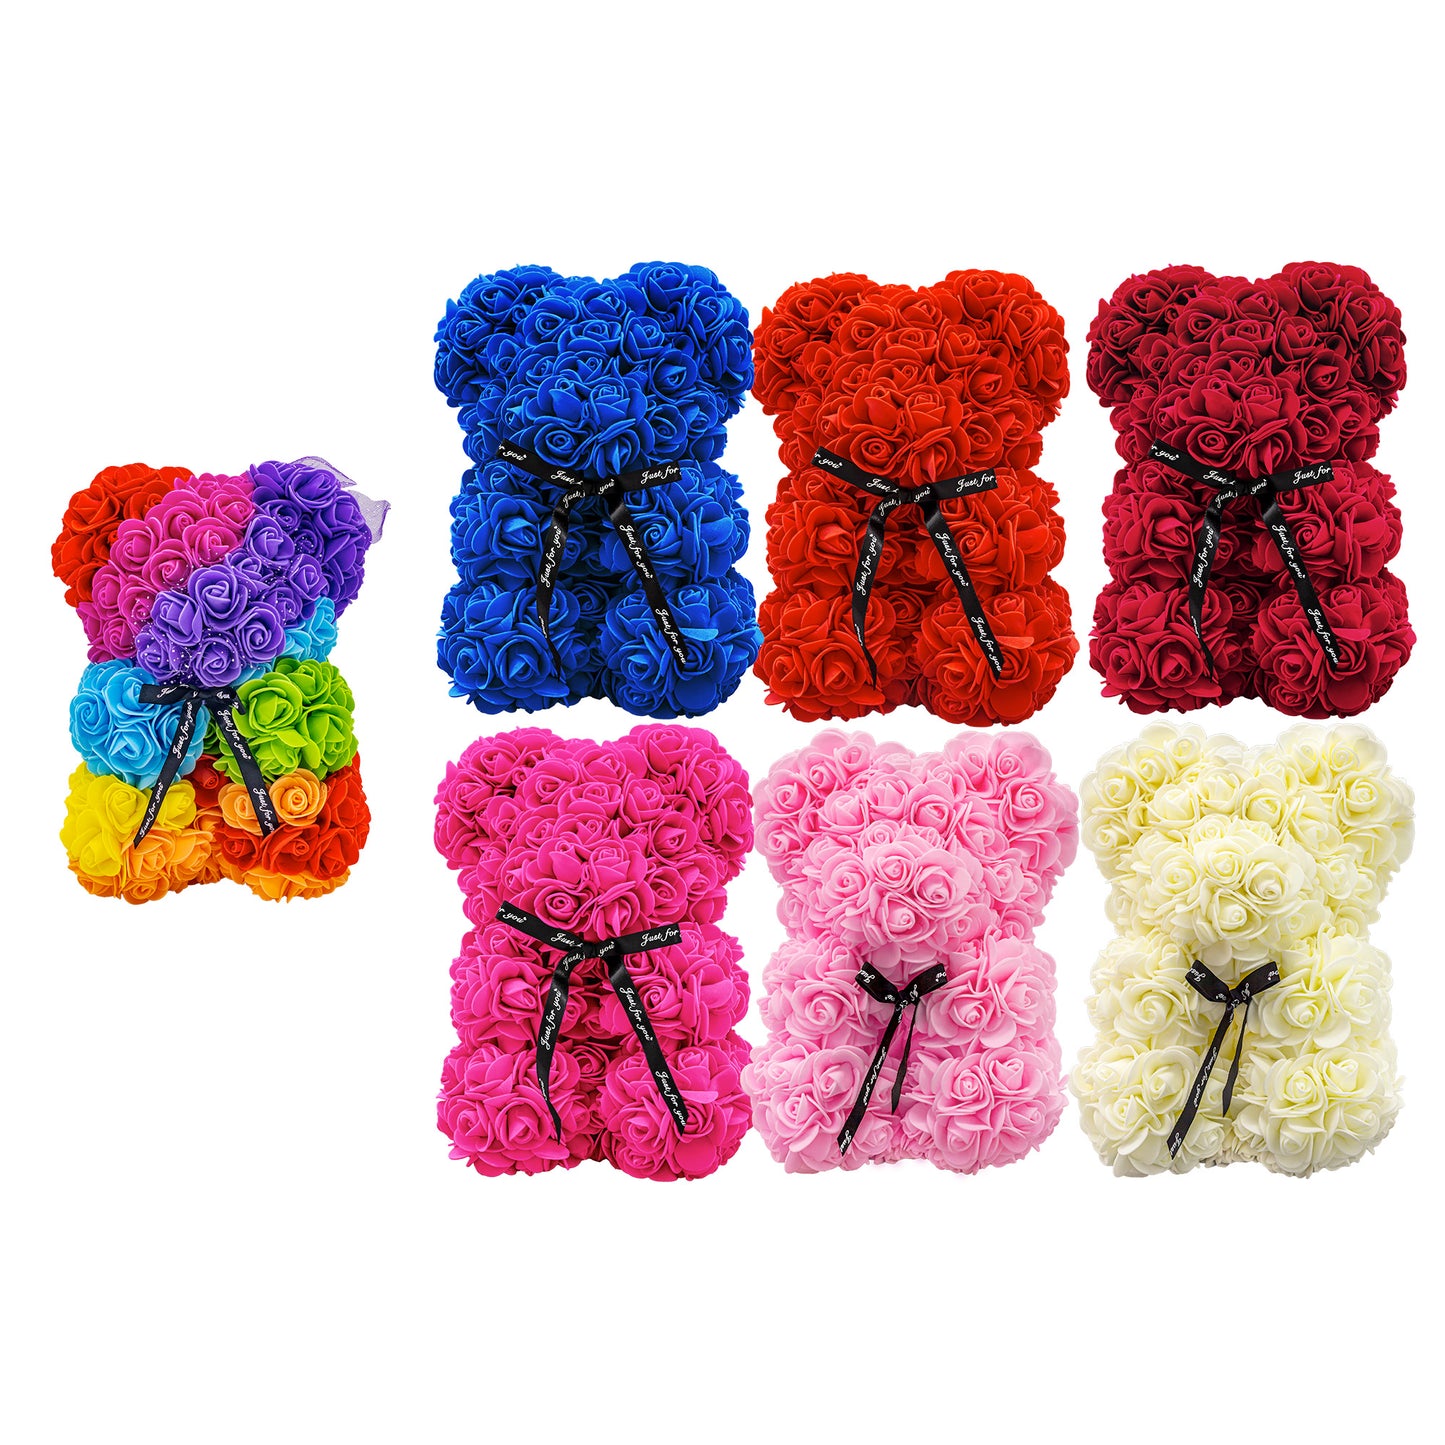 7 various color of flower bears covered in foam flowers